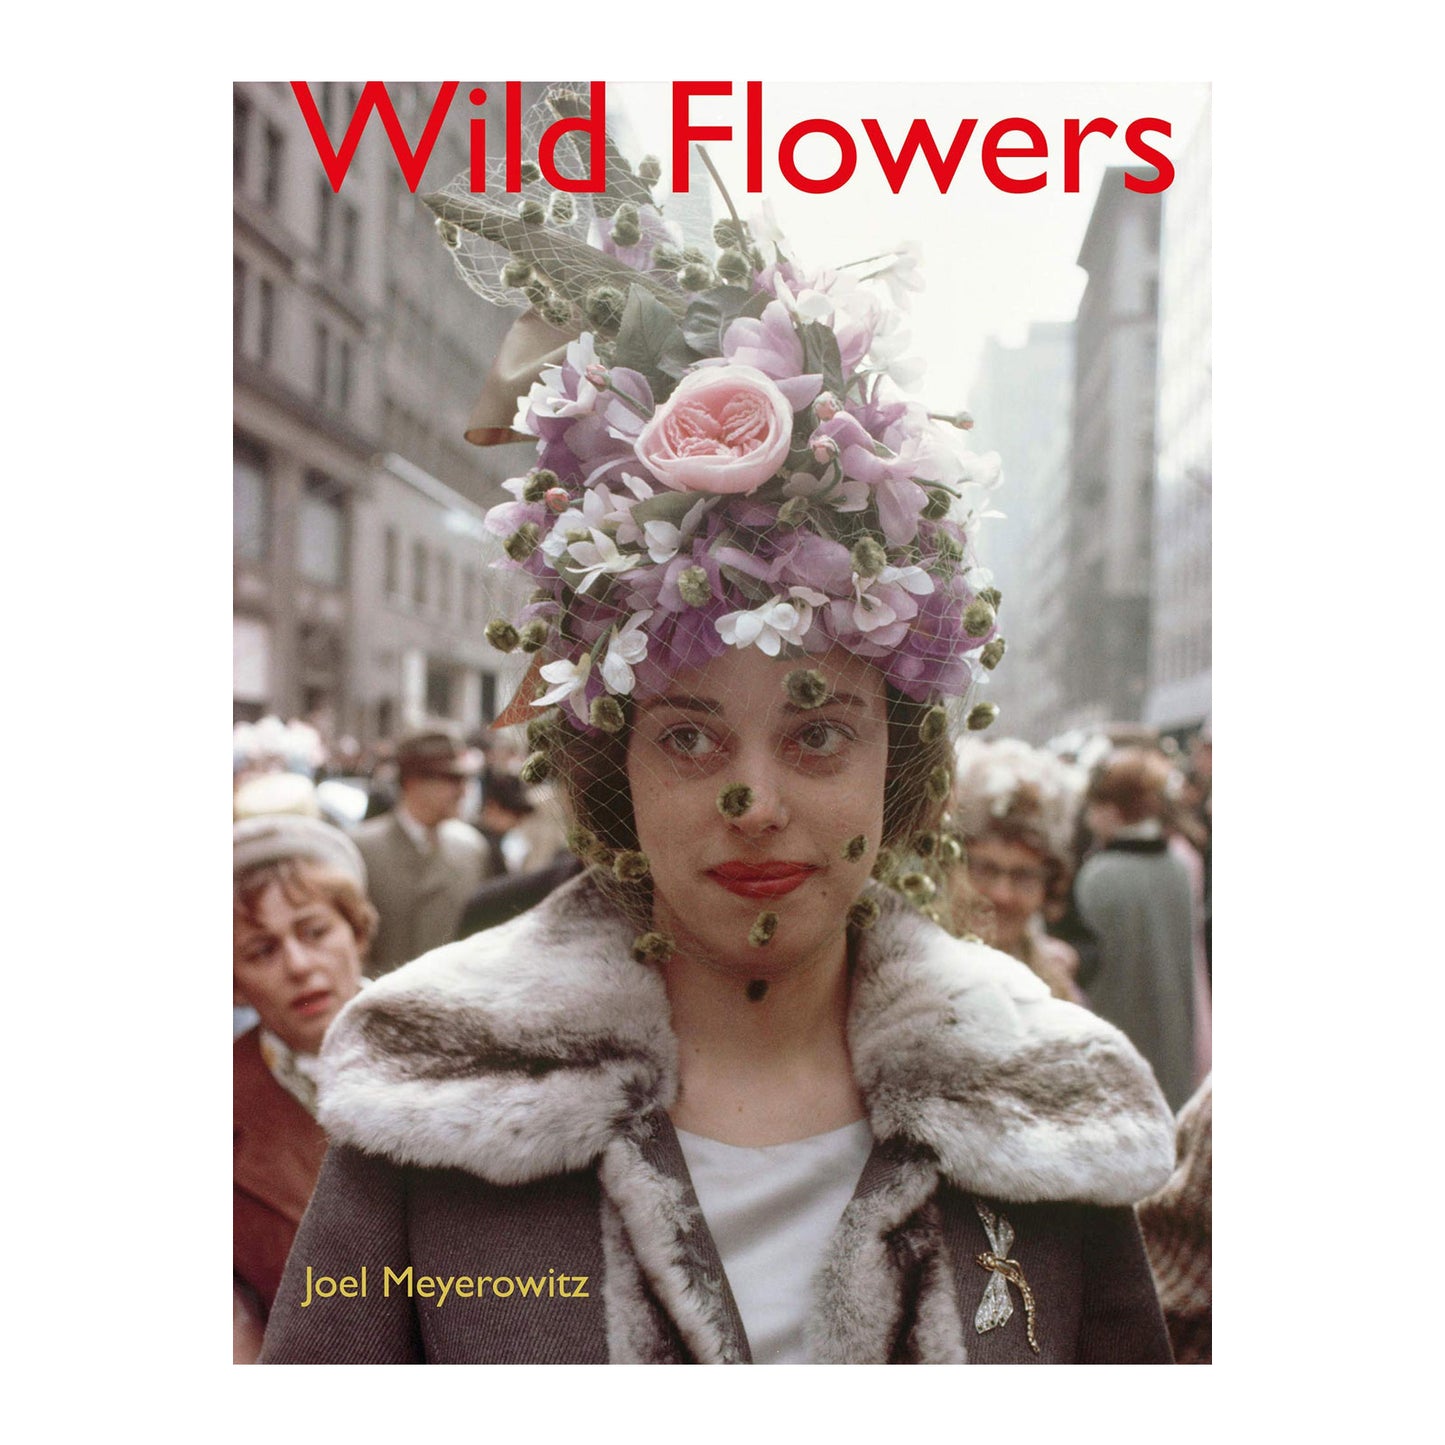 Joel Meyerowitz: Wild Flowers